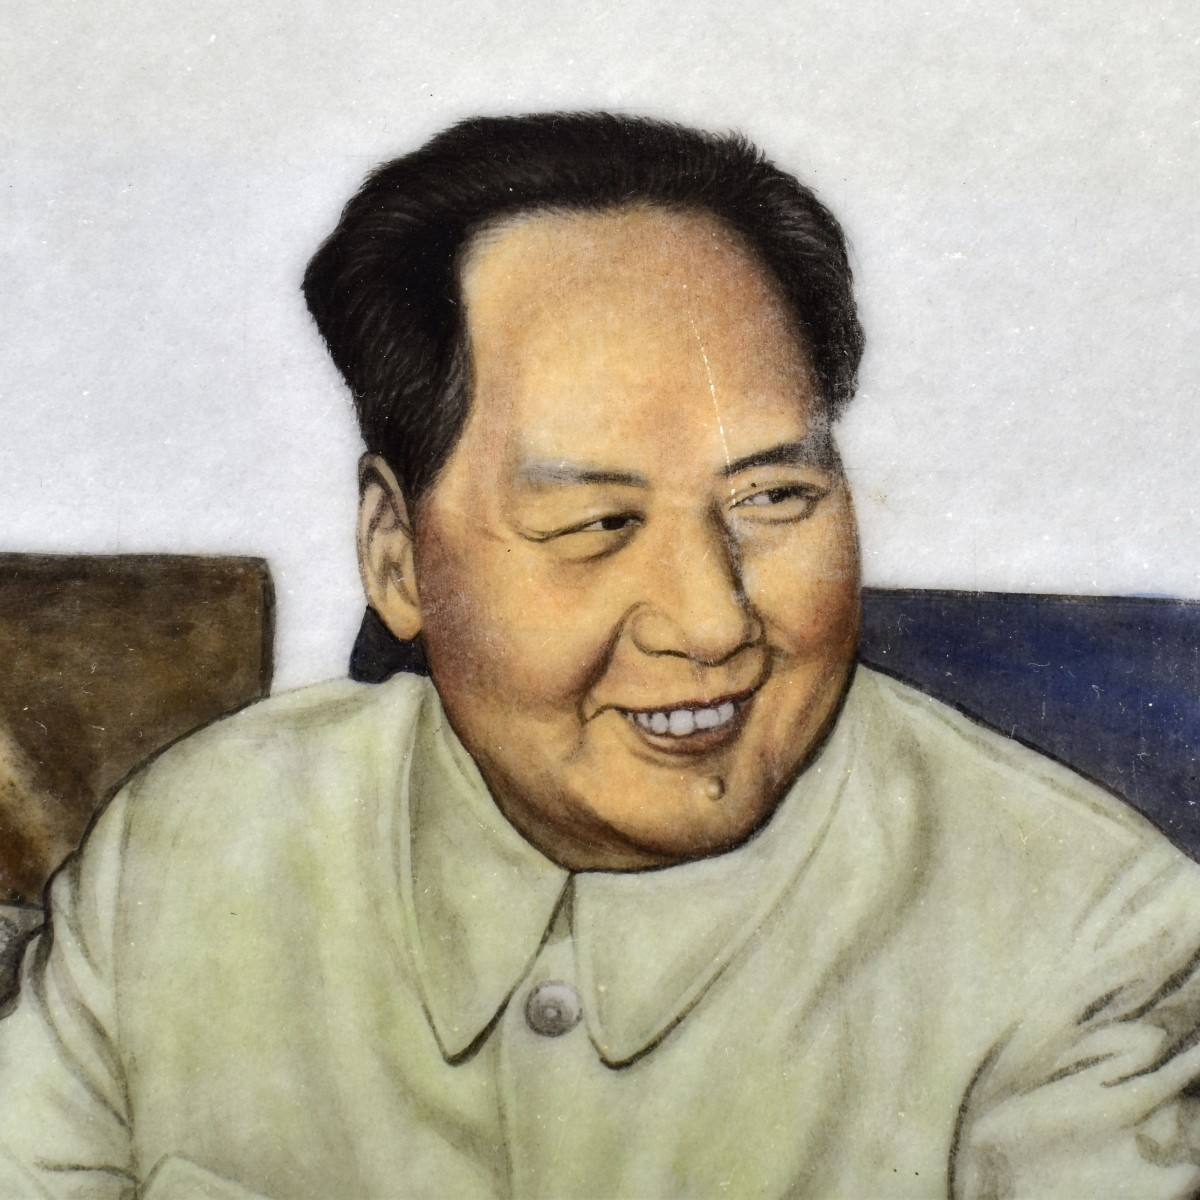 Chinese Cultural Revolution Porcelain Plaque